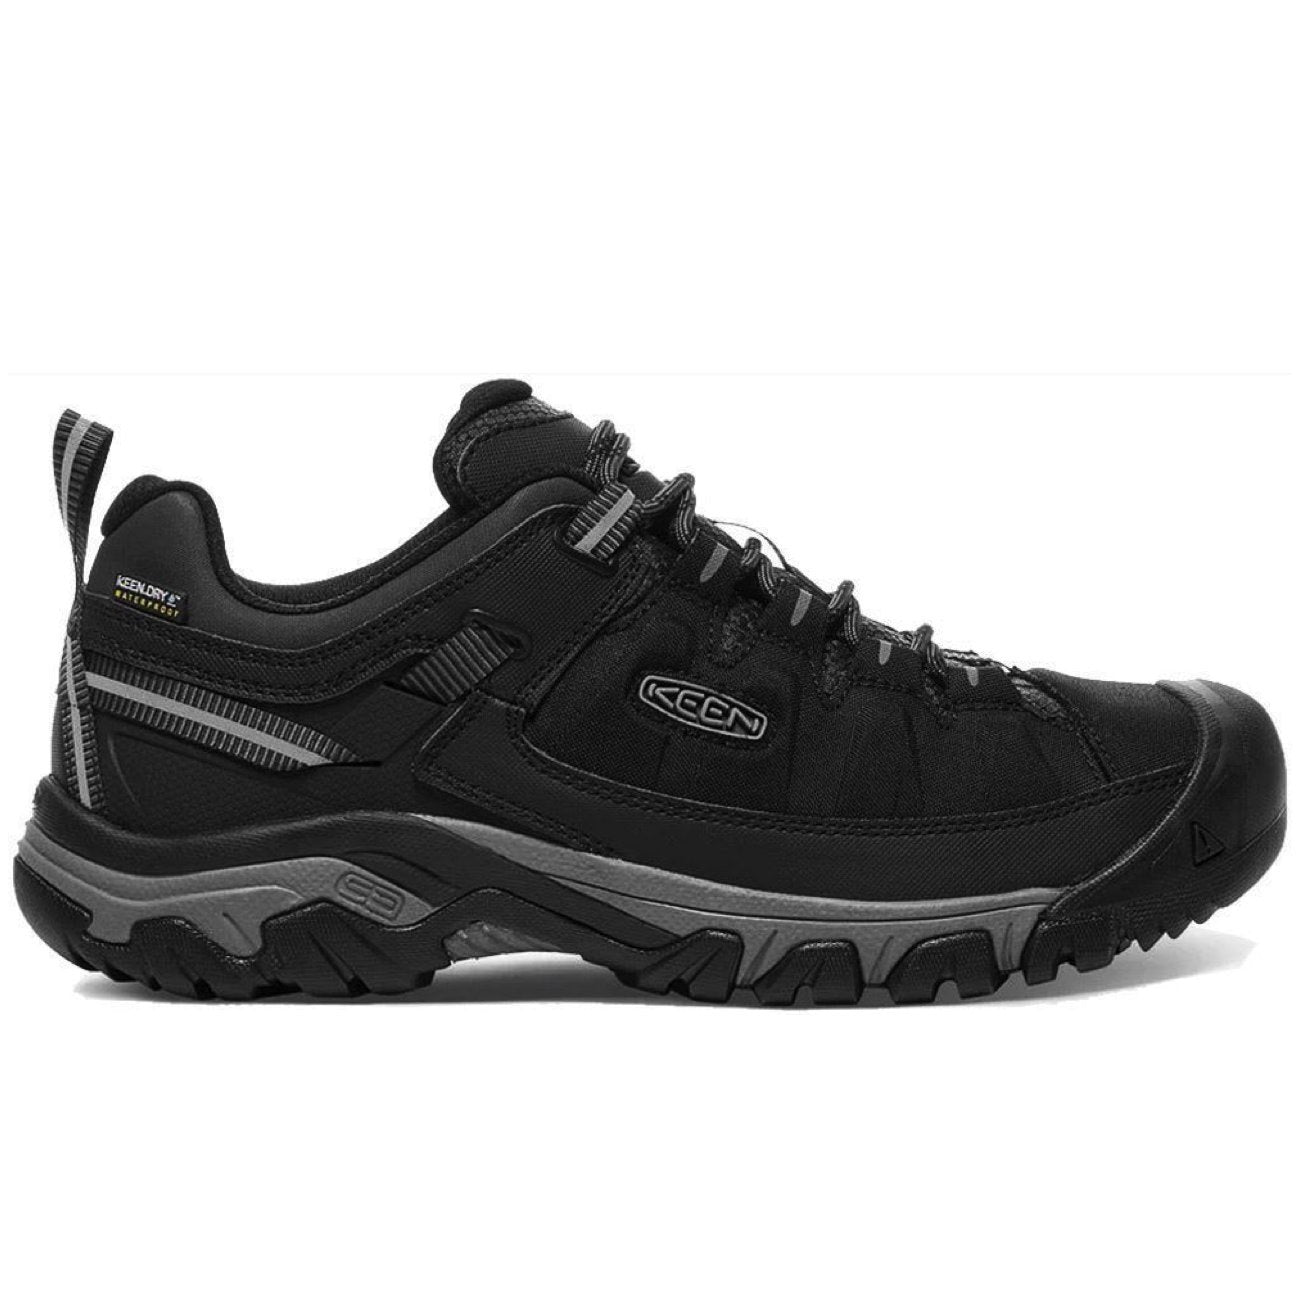 Keen, Targhee EXP WP Mens, Shoe, Black Steel Gray Hiking Shoes Keen Black Steel Gray 10 